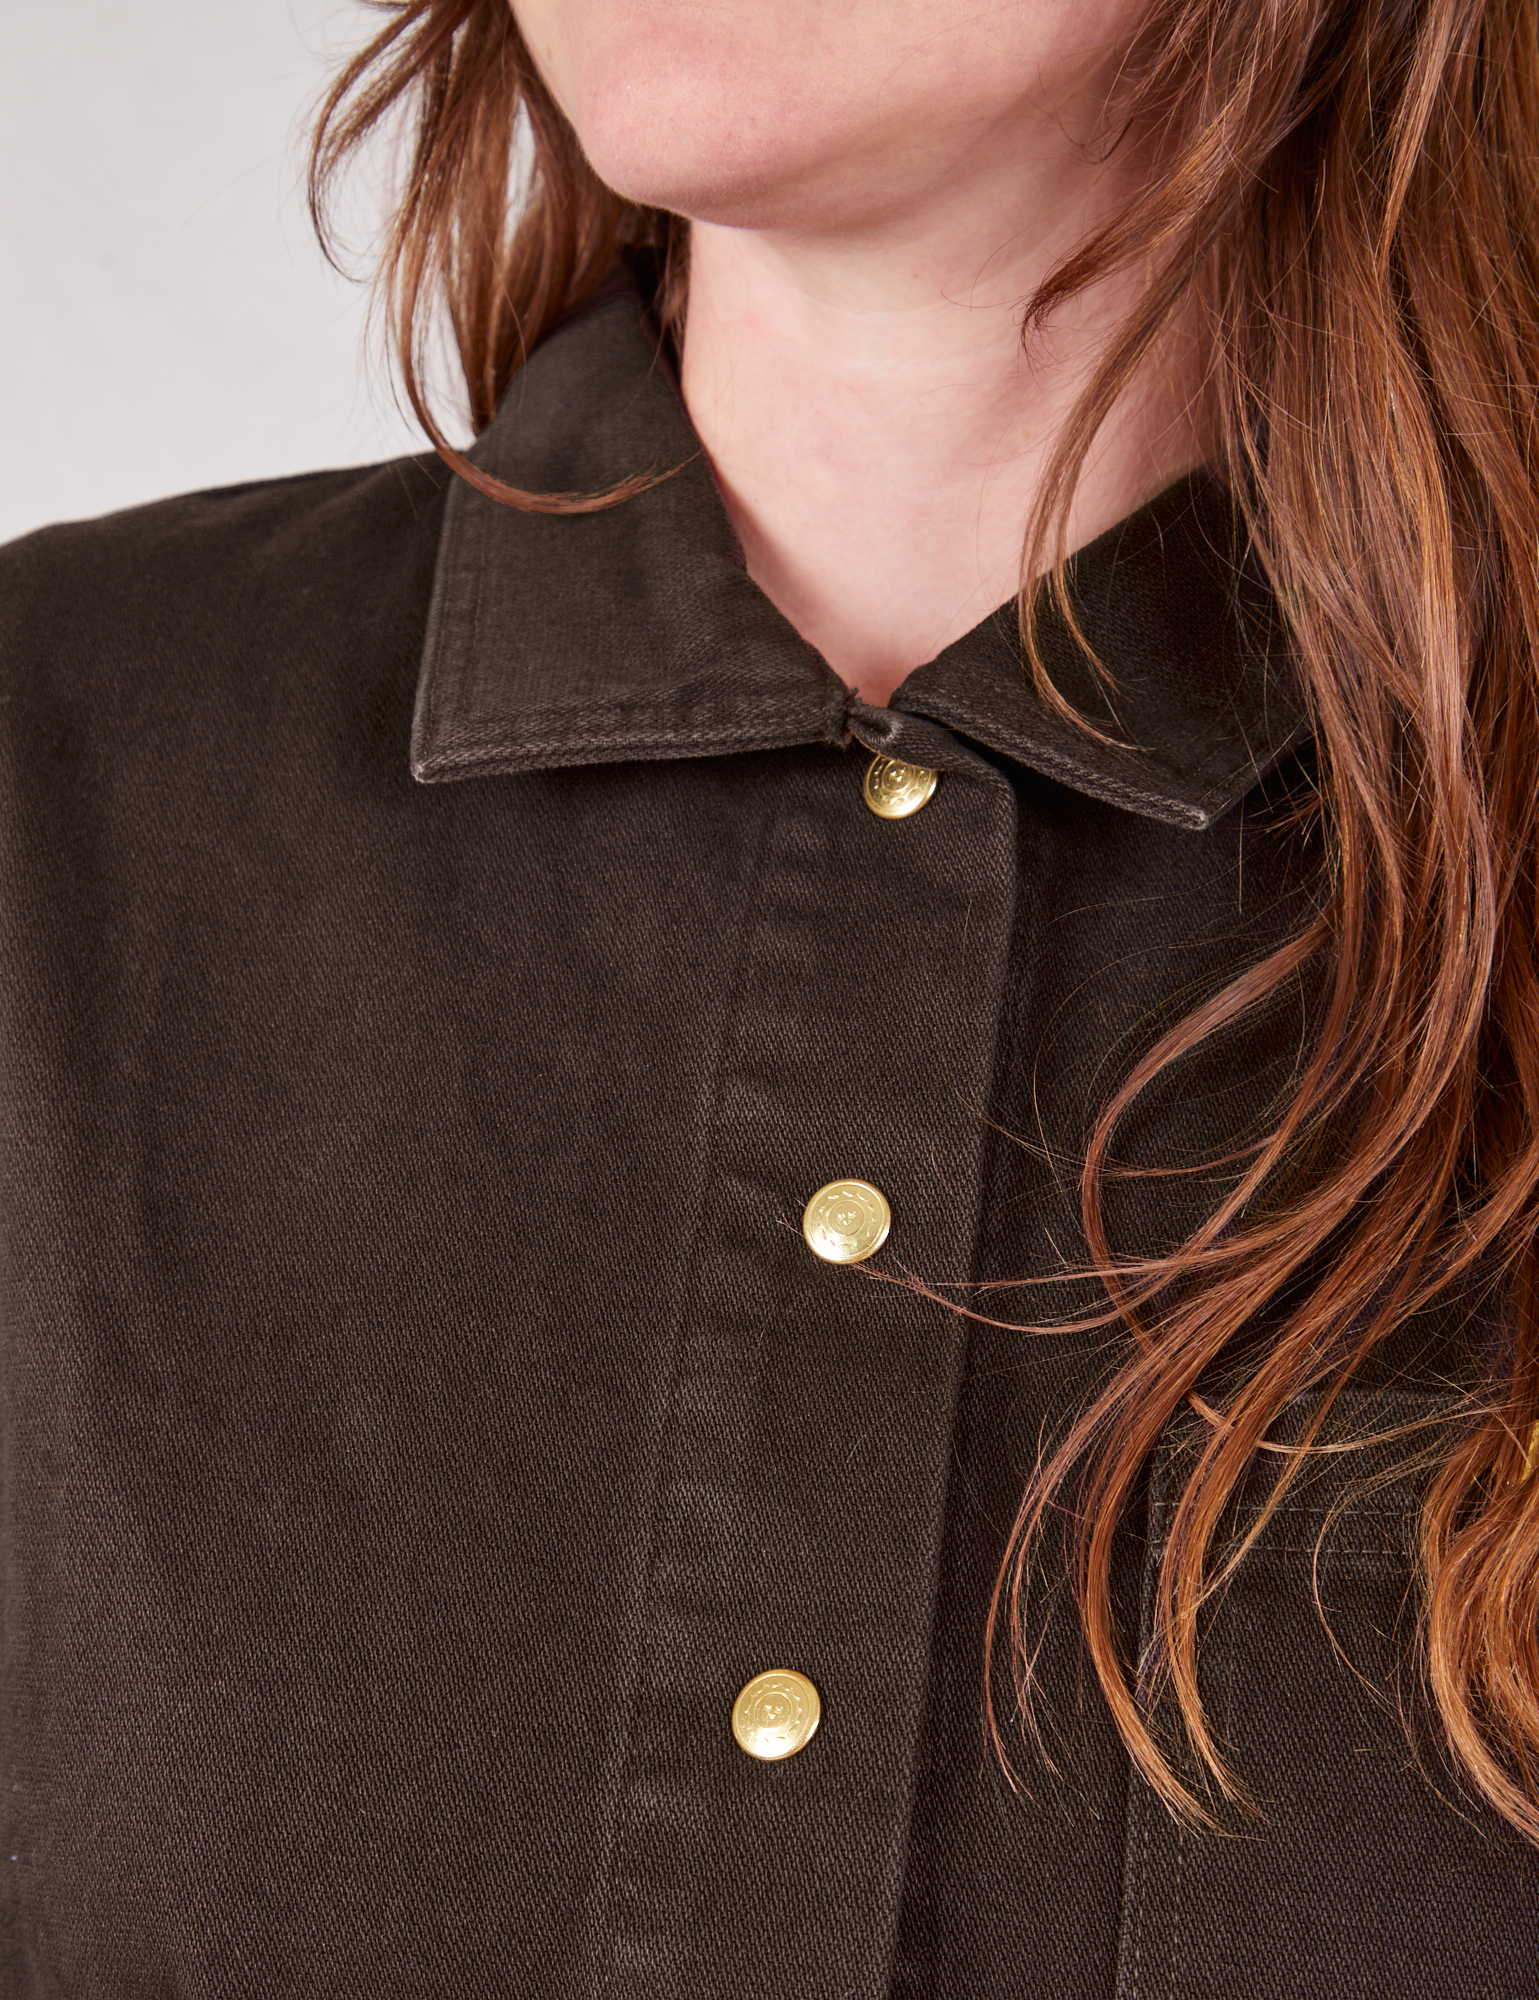 Denim Work Jacket in Espresso Brown front close up on Allison featuring sun baby brass buttons